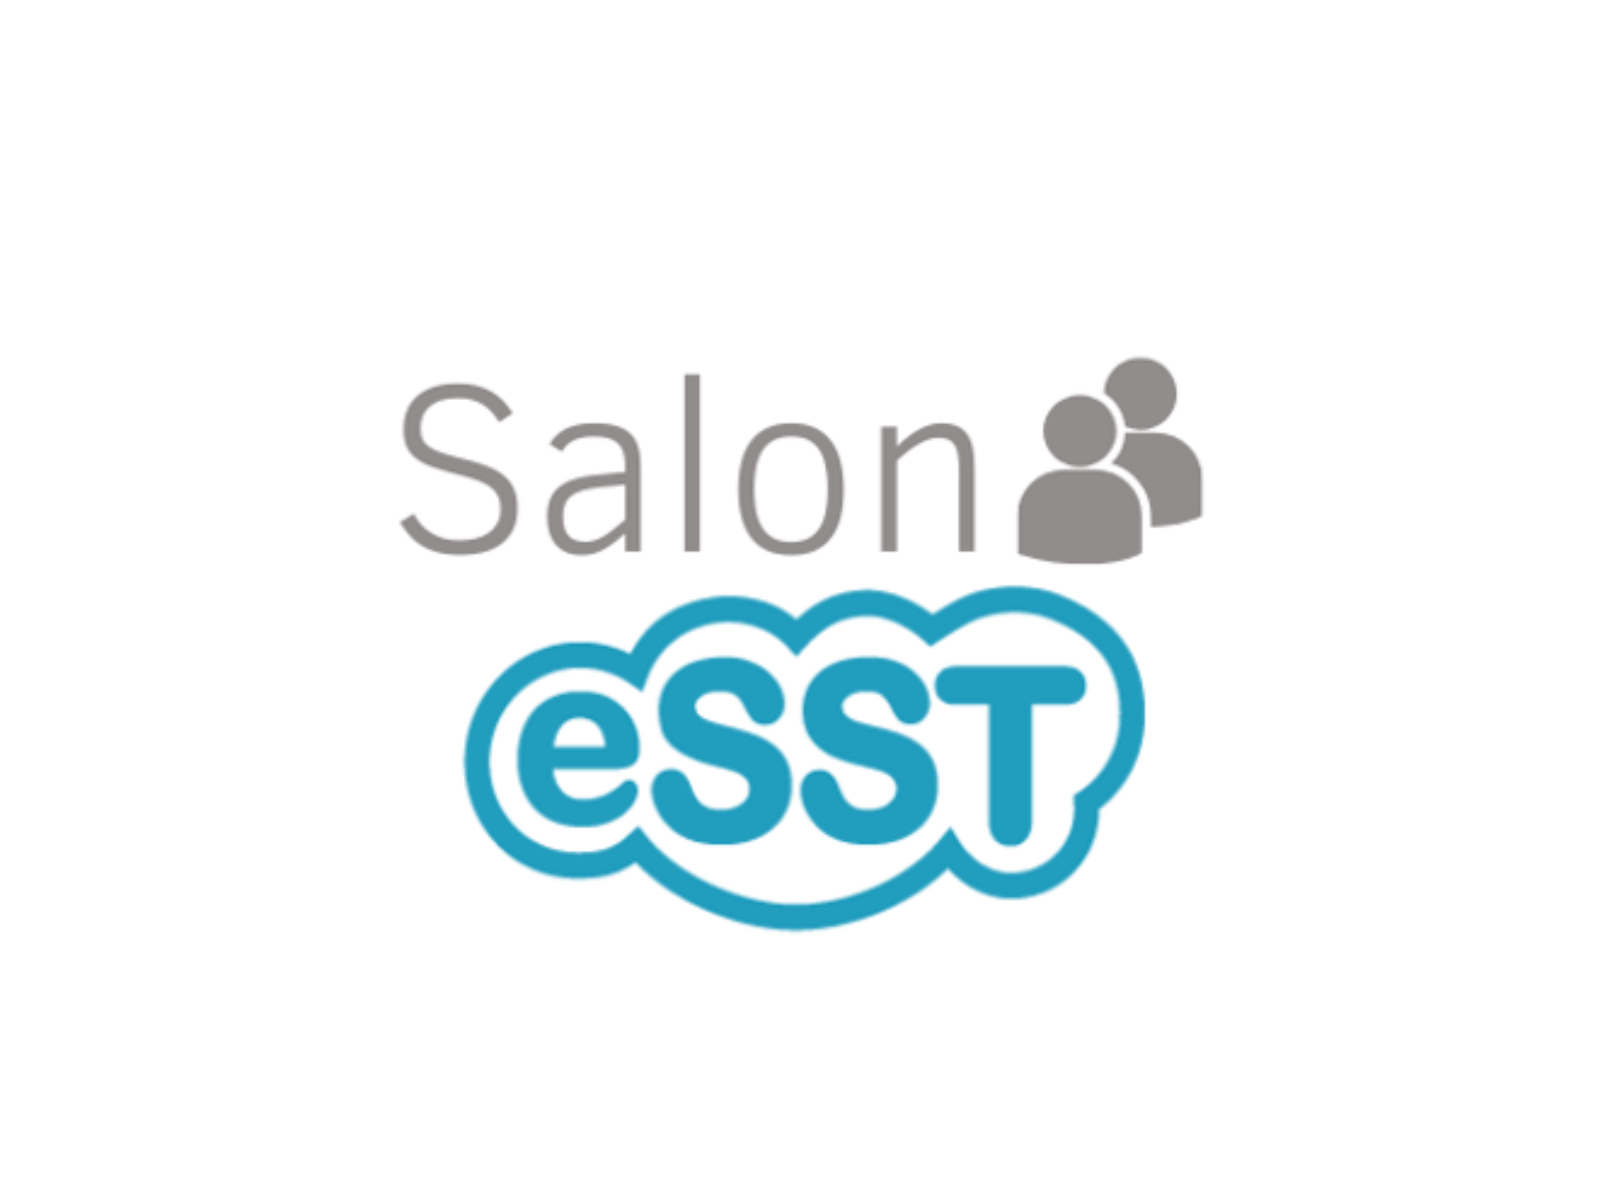 Salon eSST